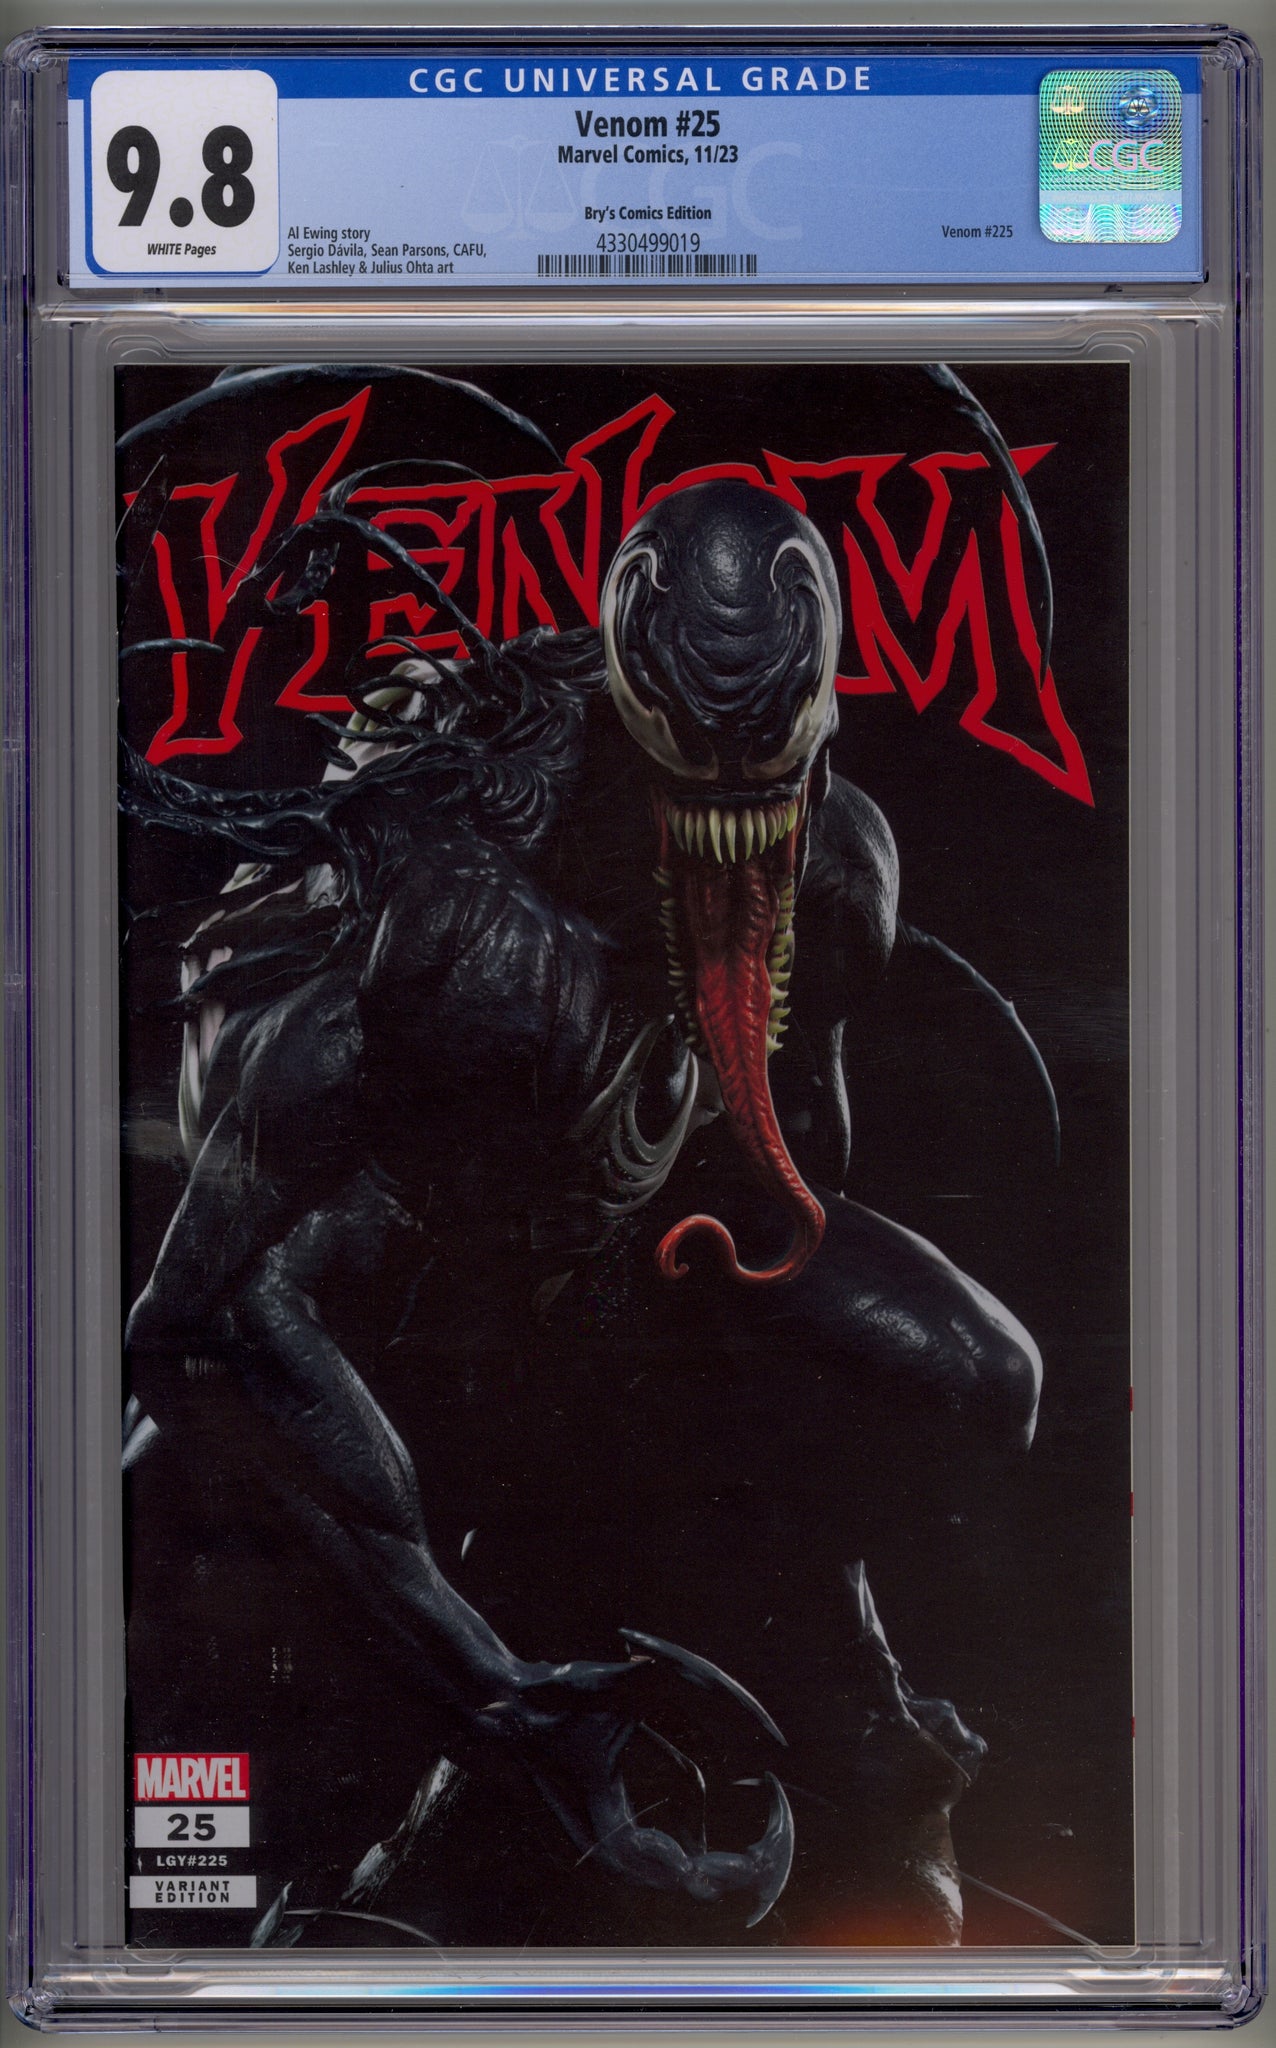 Venom #25 (2023) Bry's Comics Rafael Grassetti cover variant